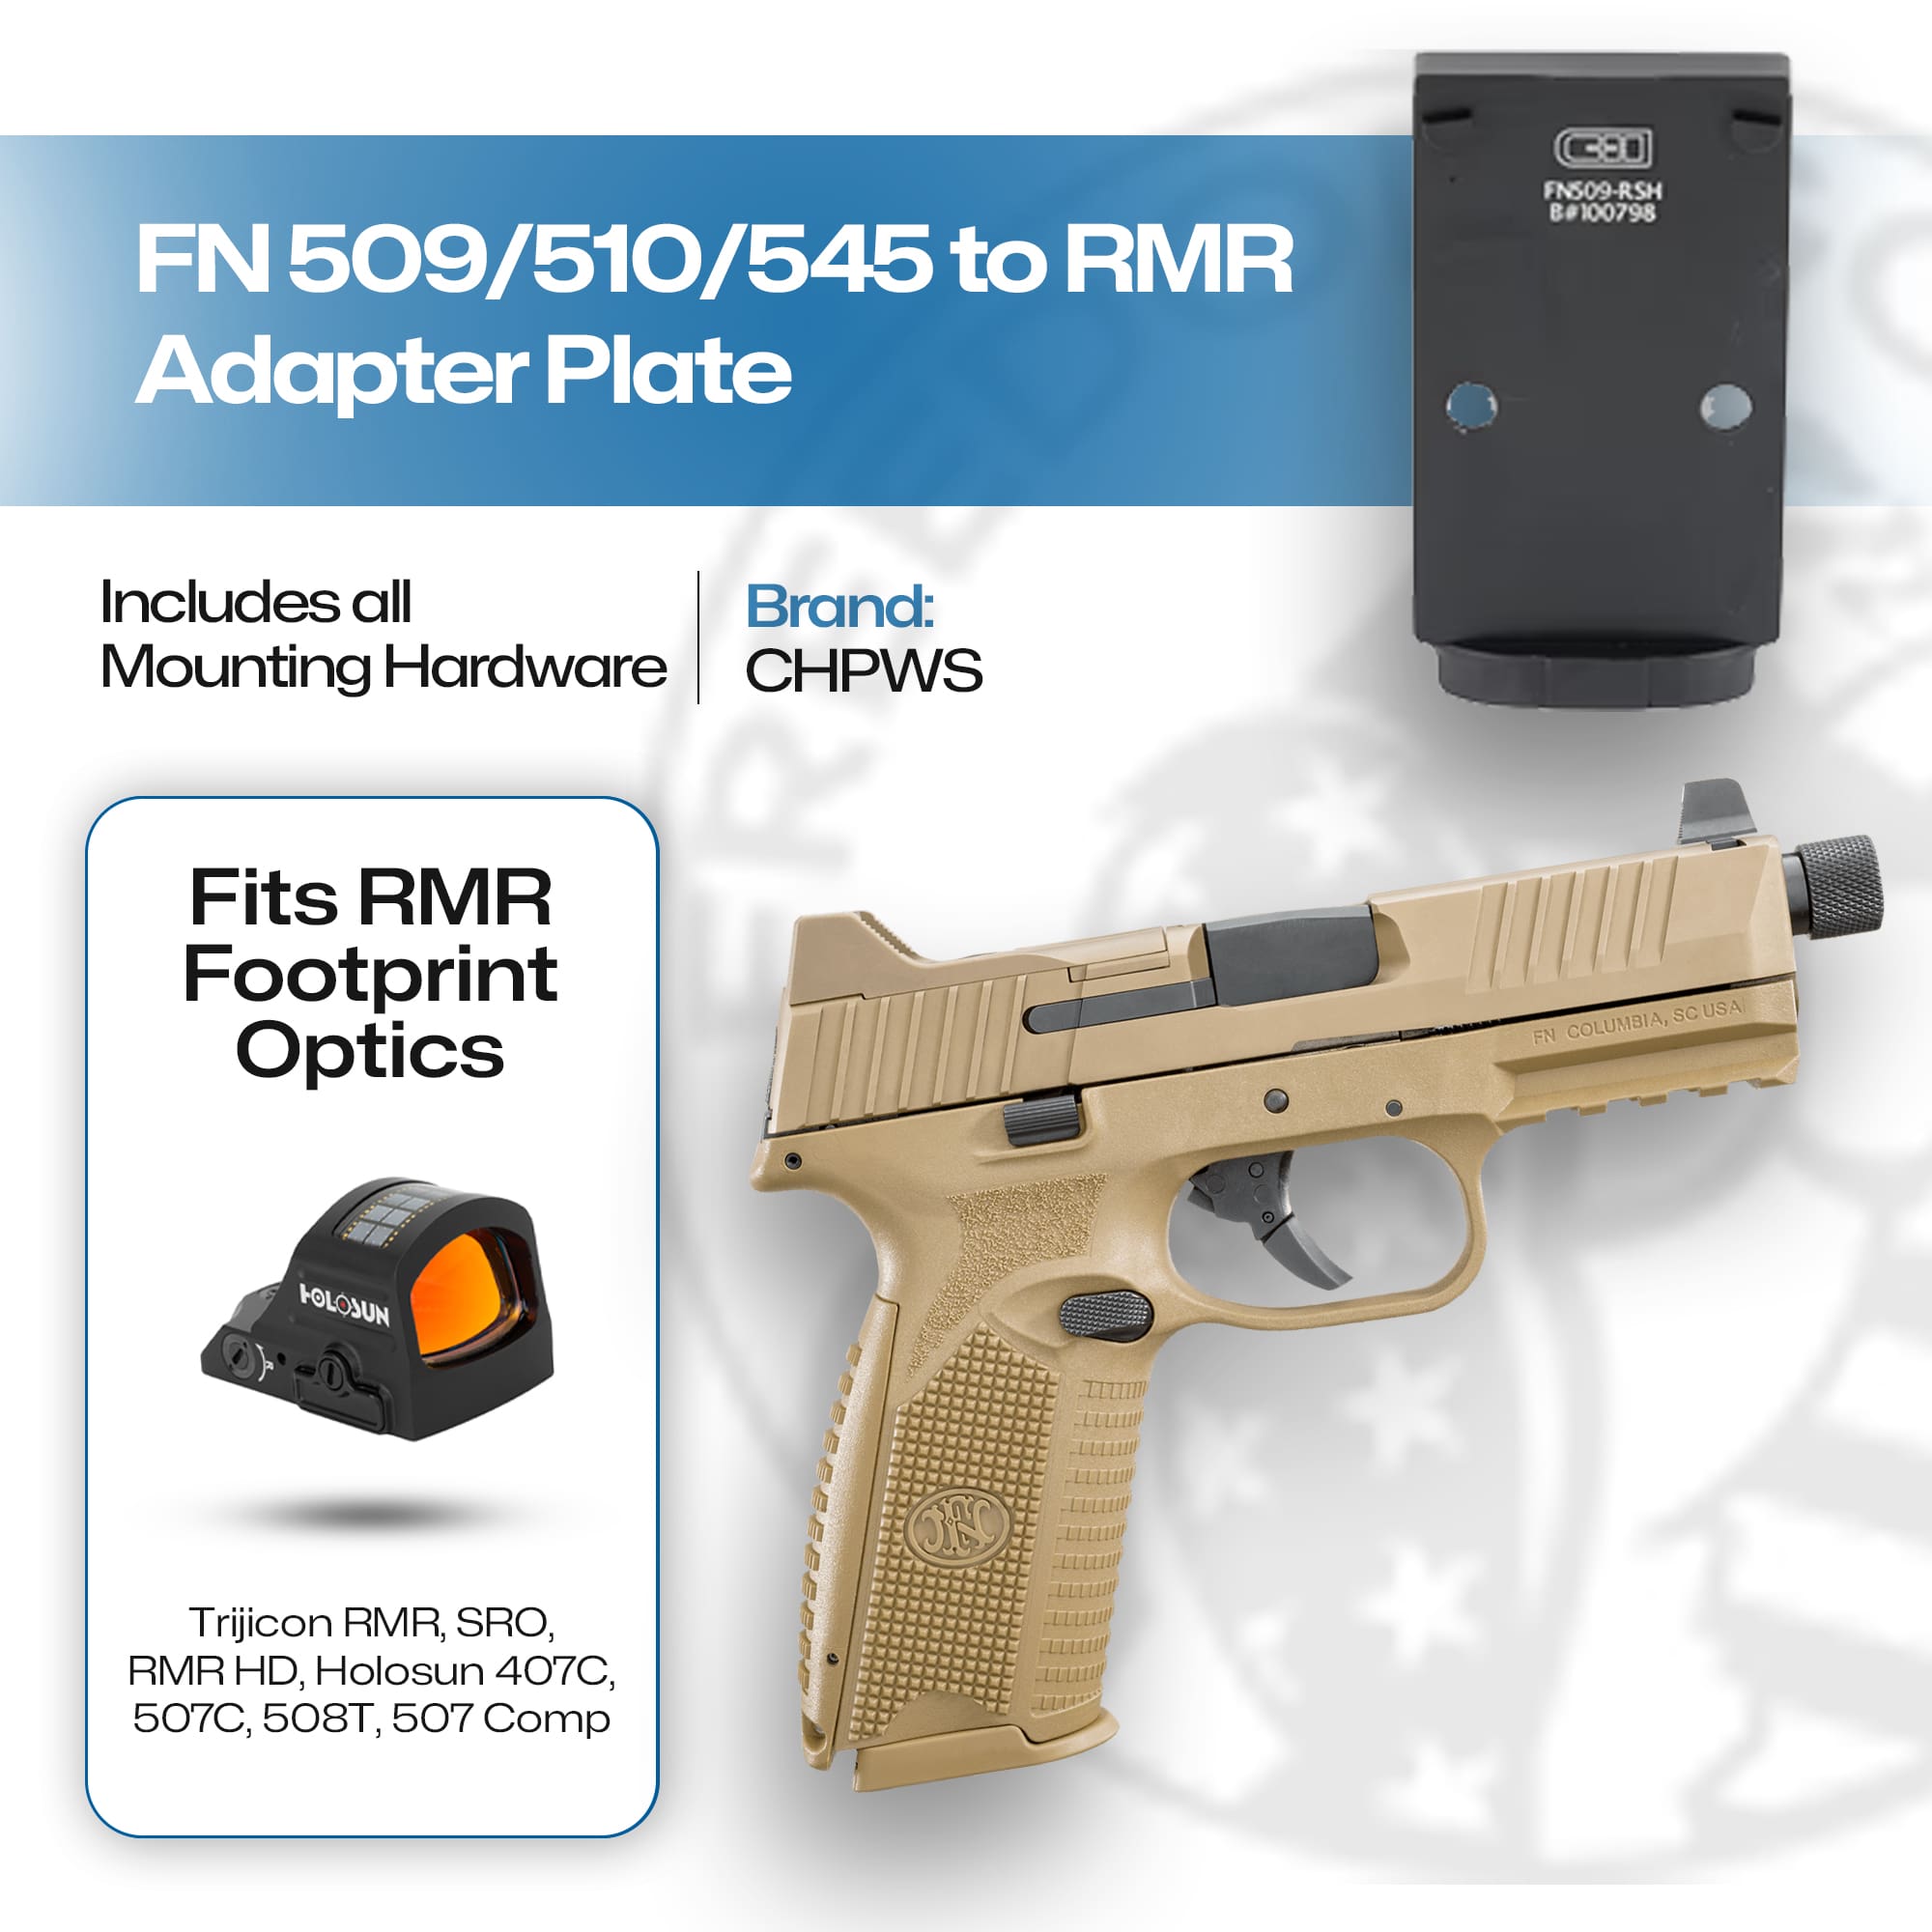 FN 509/510/545 to RMR Holosun 407C/507C/508C Adapter Plate - CHPWS - FN509-RSH